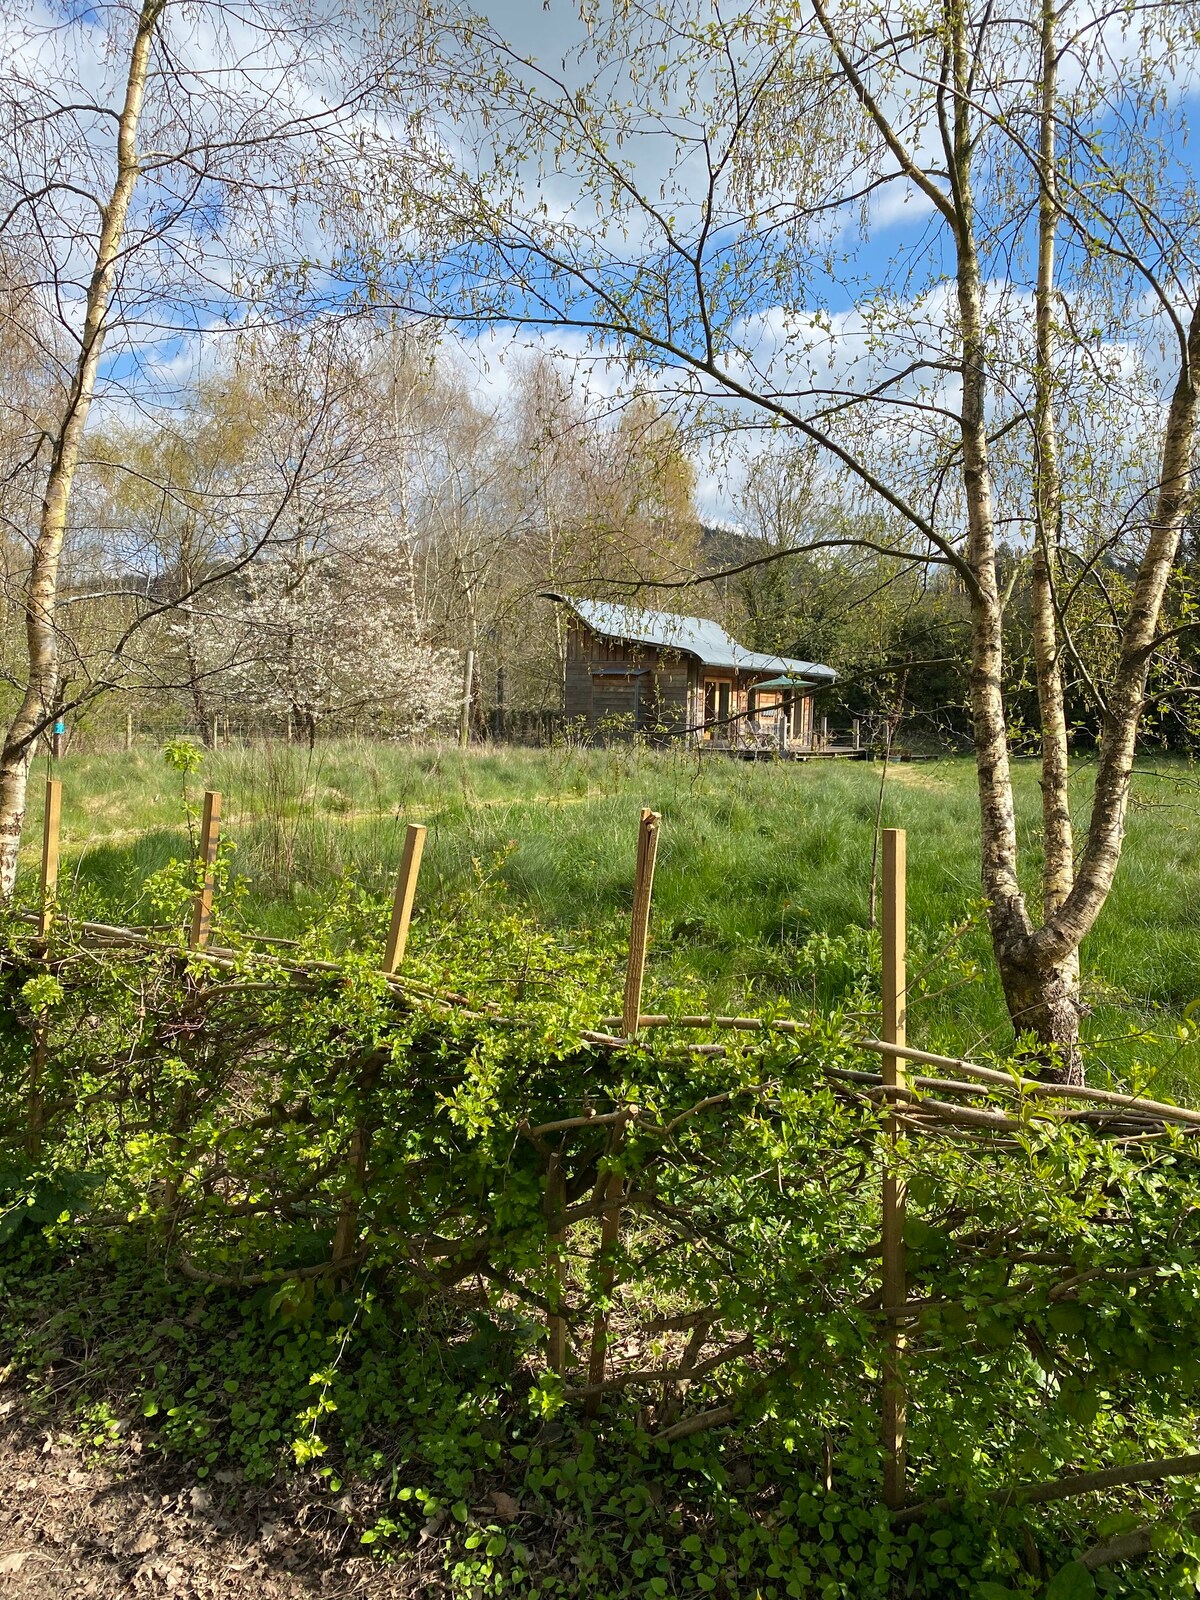 The Cabin at Hales Barn, Bucknell, Shropshire